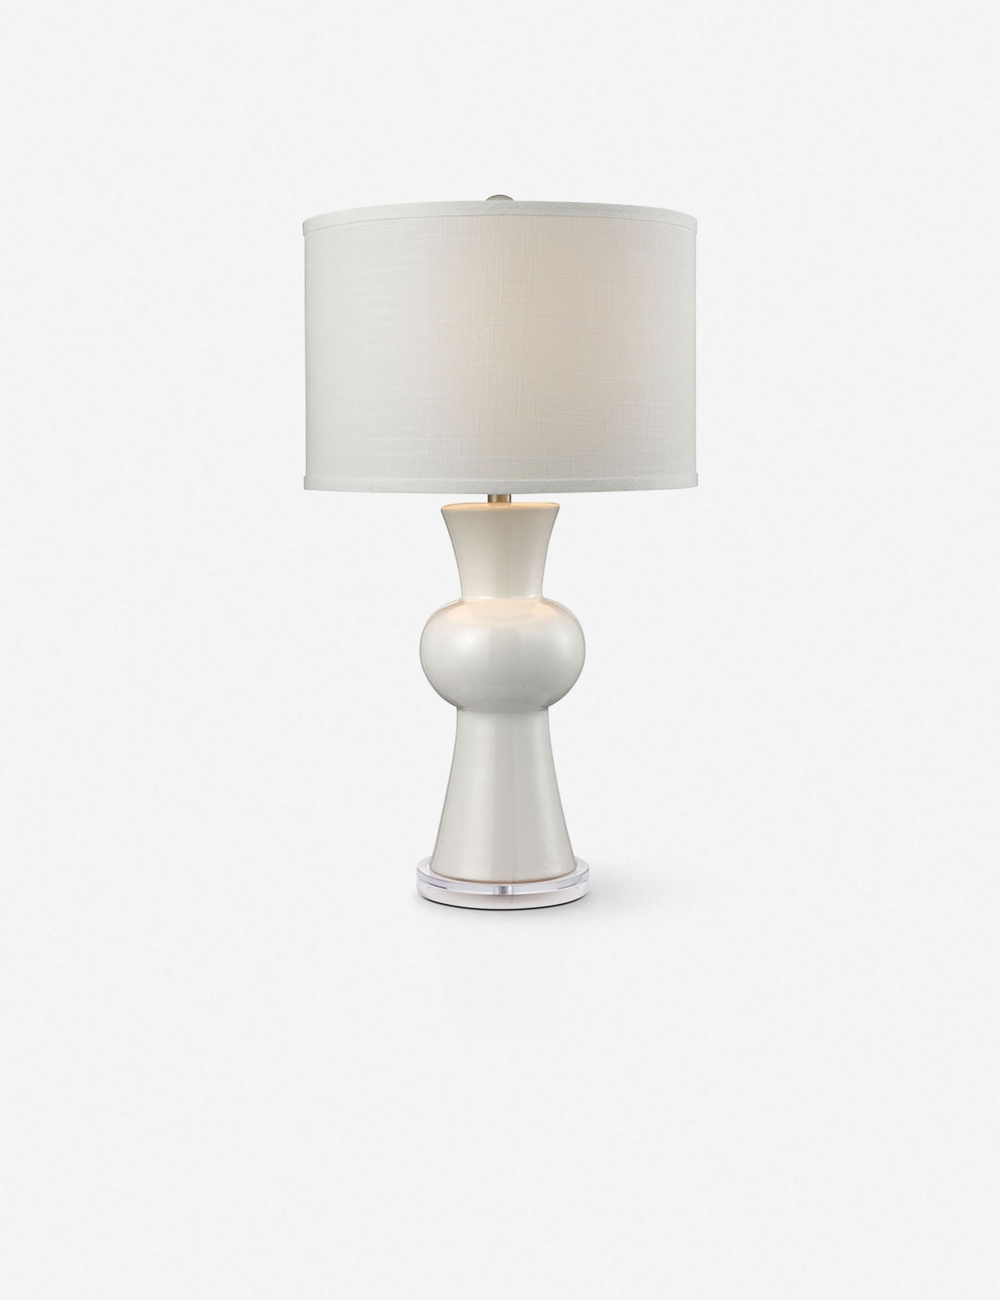 CERTO TABLE LAMP - Image 0